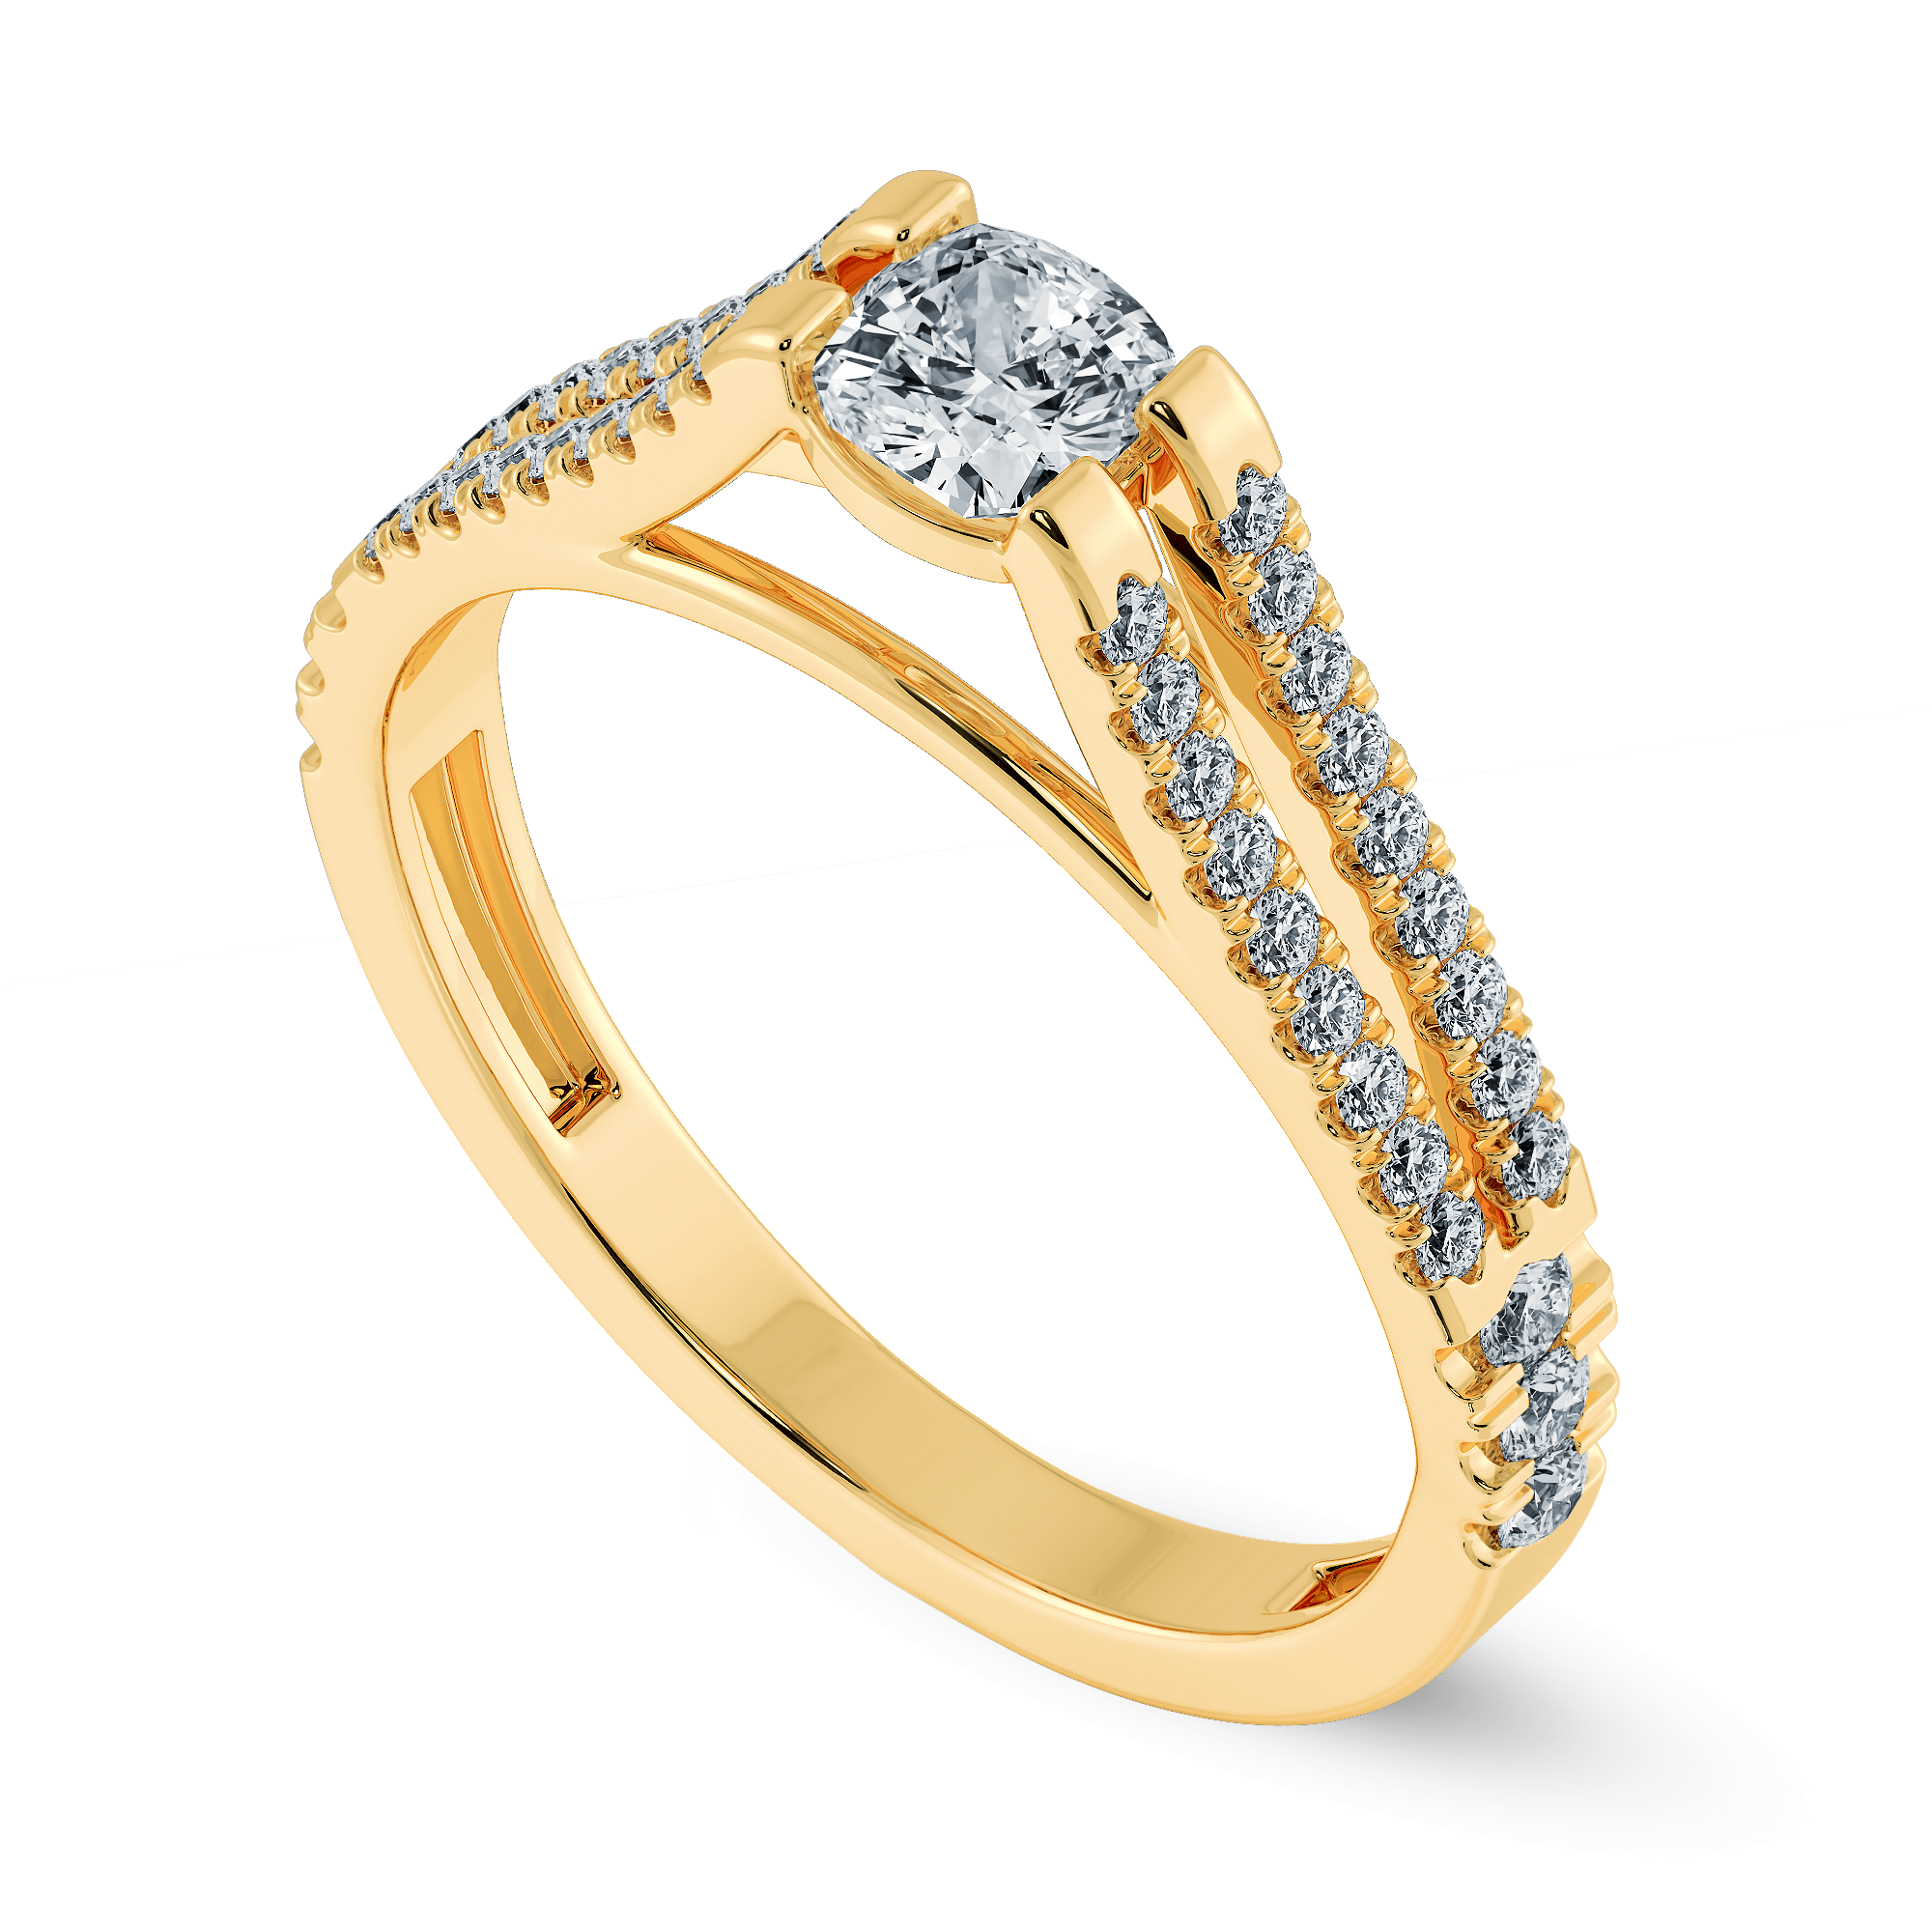 Gold Ladies Ring with Stone | Akshaya Gold & Diamonds | Buy Online